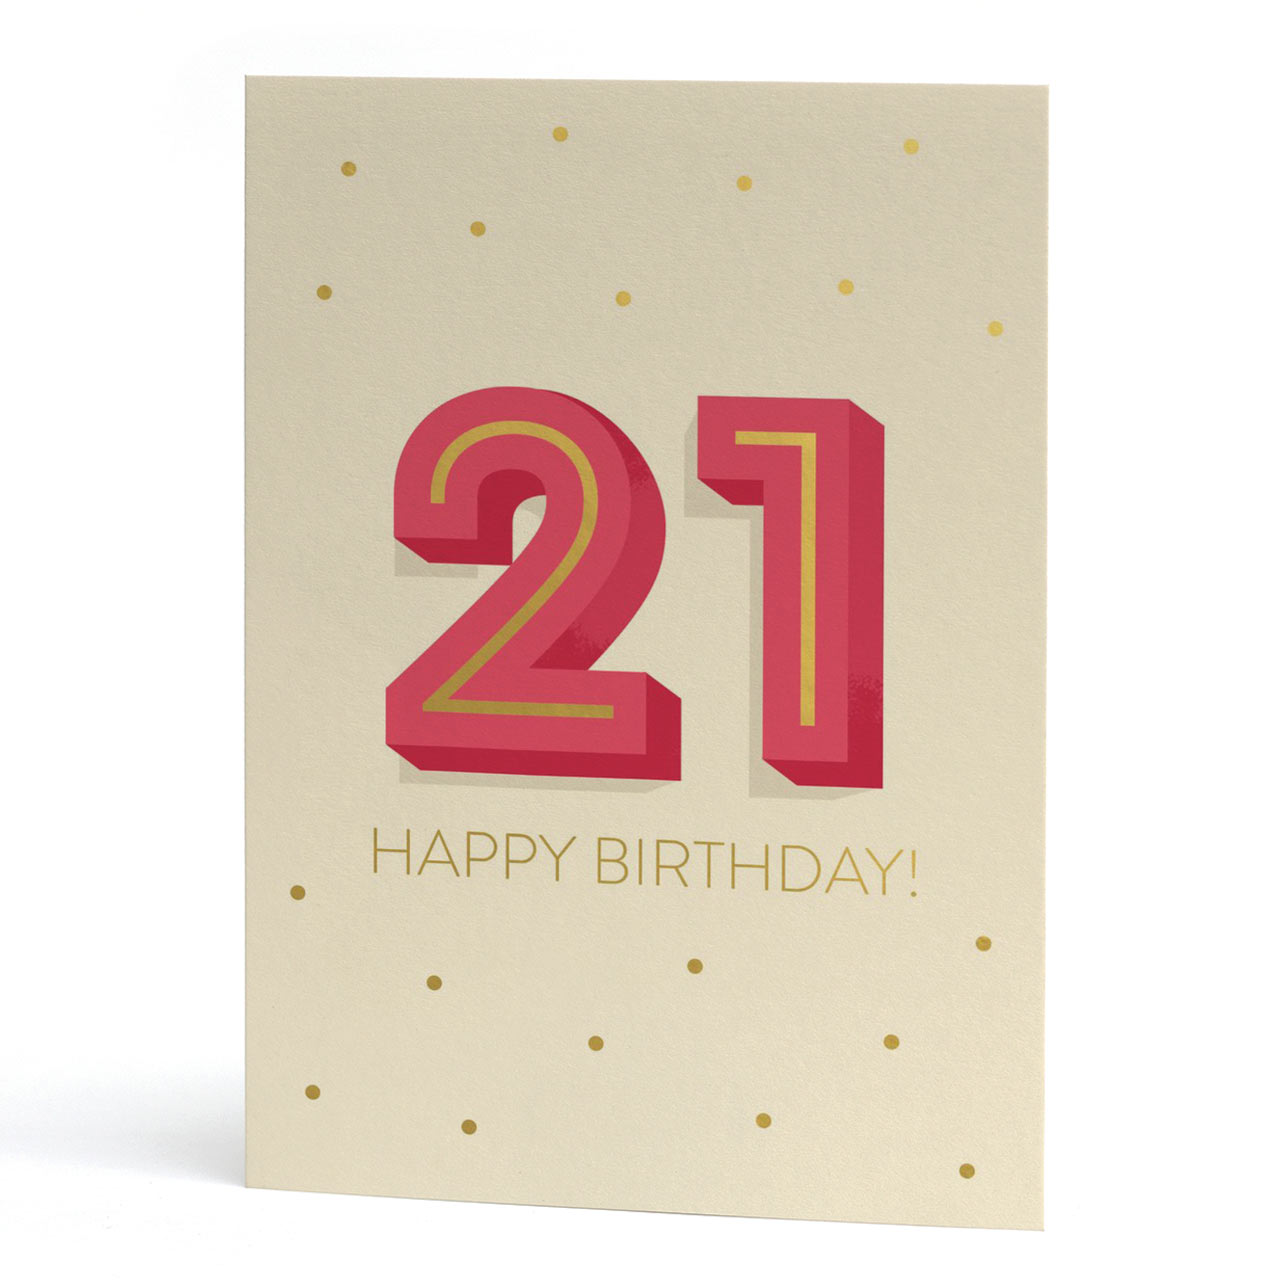 Big 21st Birthday Gold Foil Greeting Card